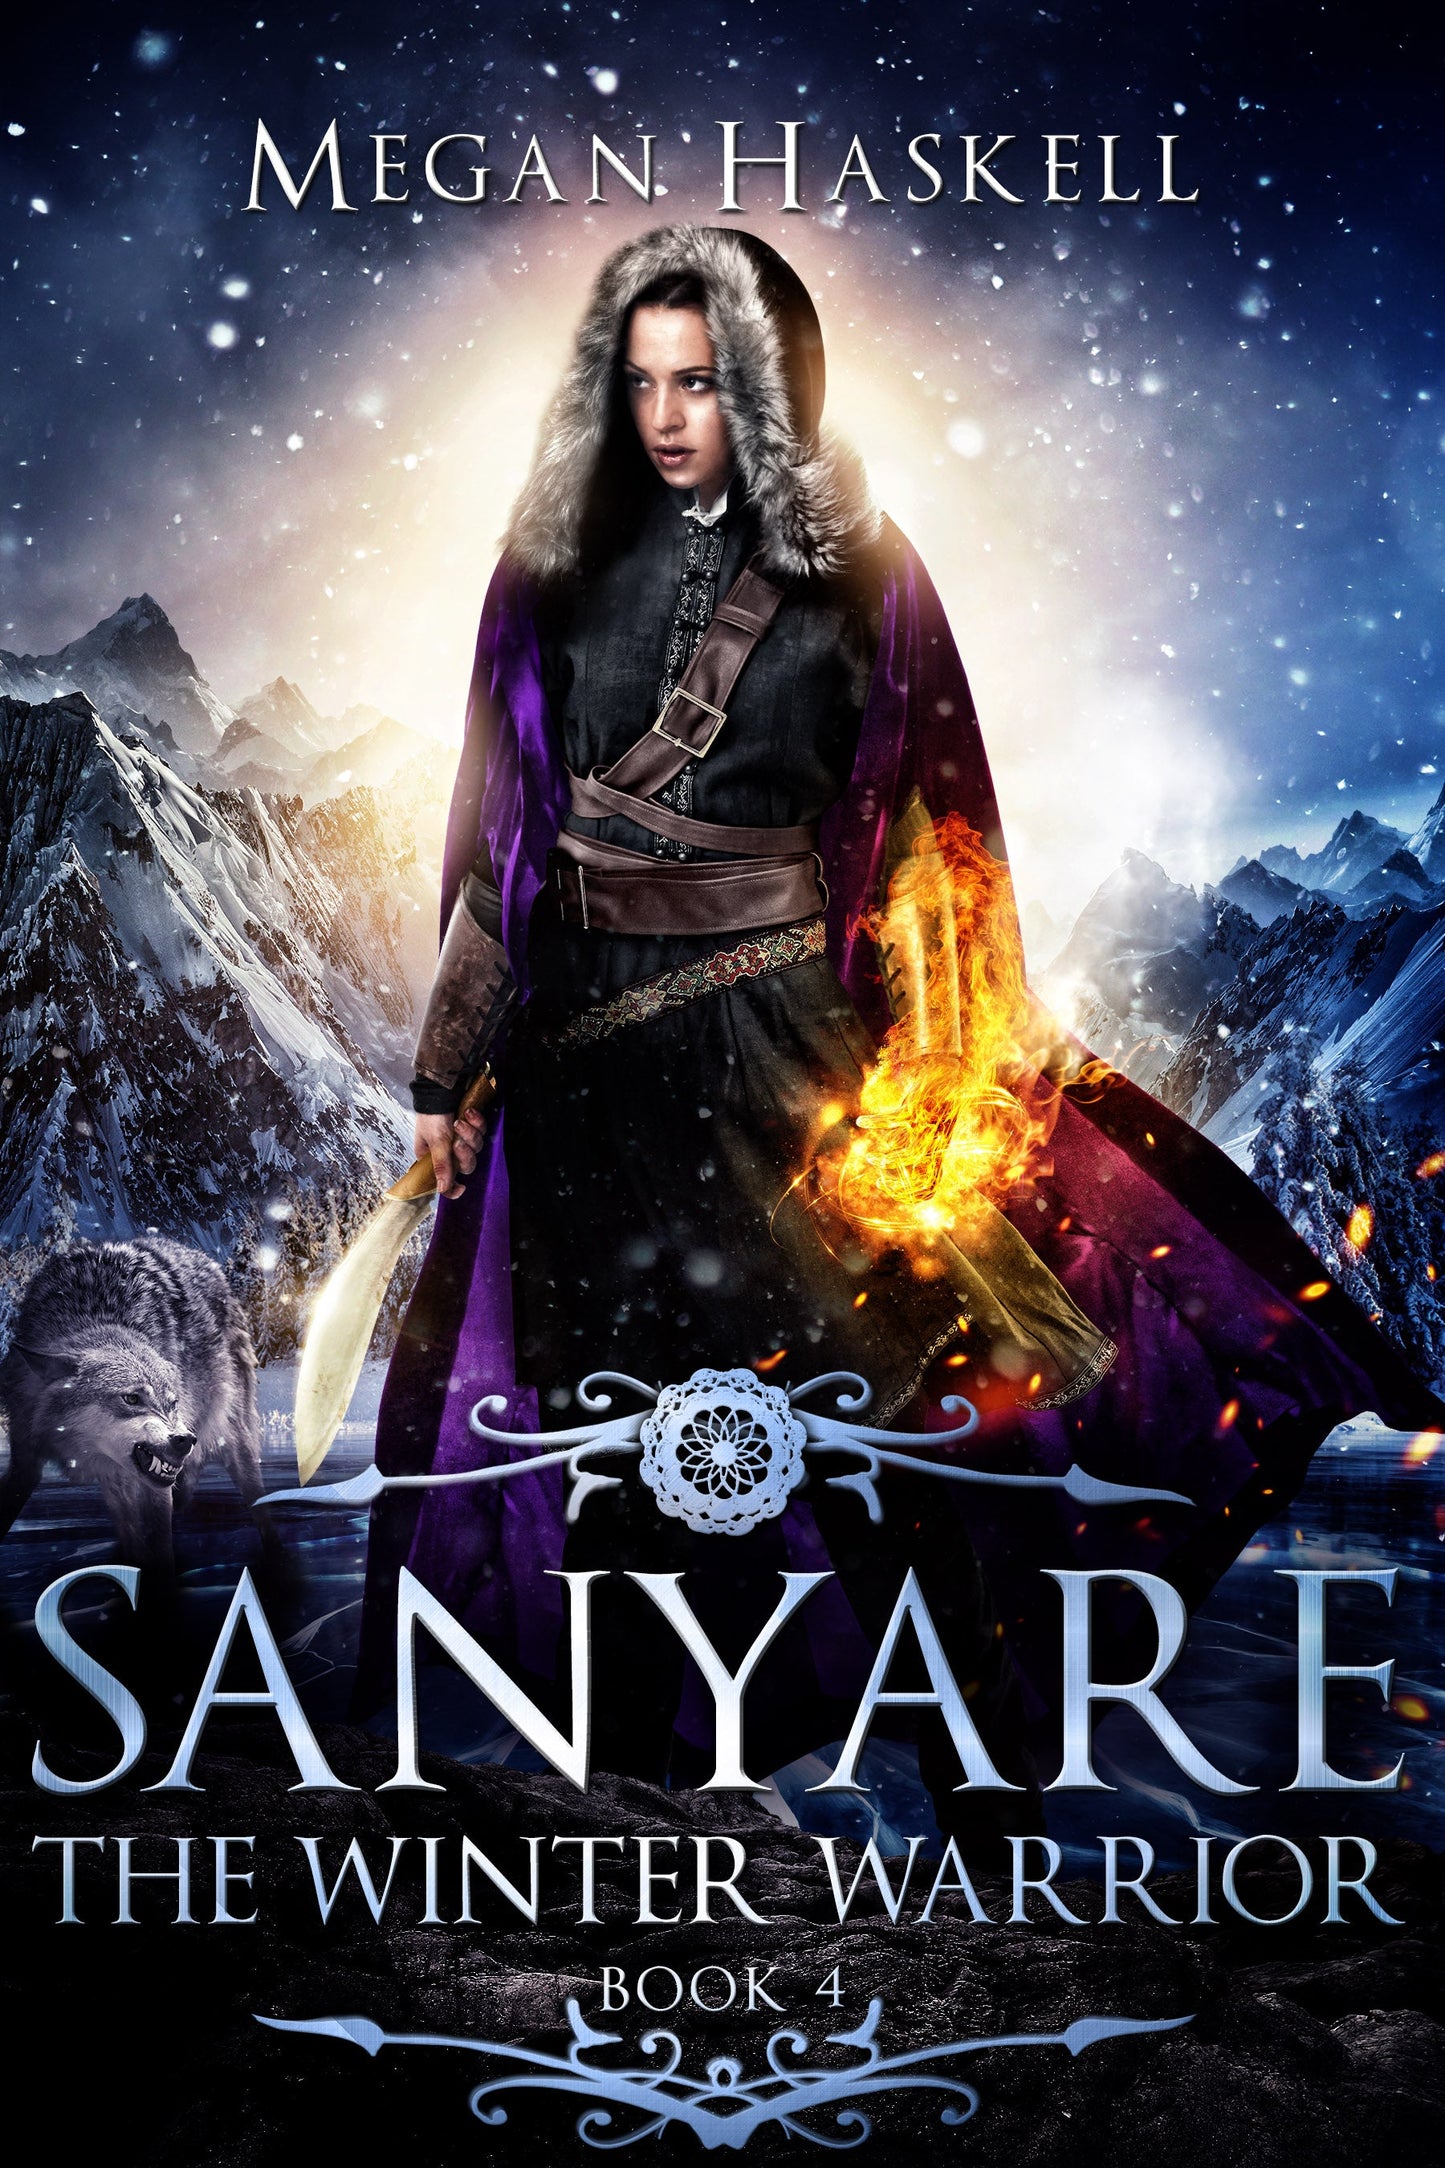 The Sanyare Chronicles Digital Set!